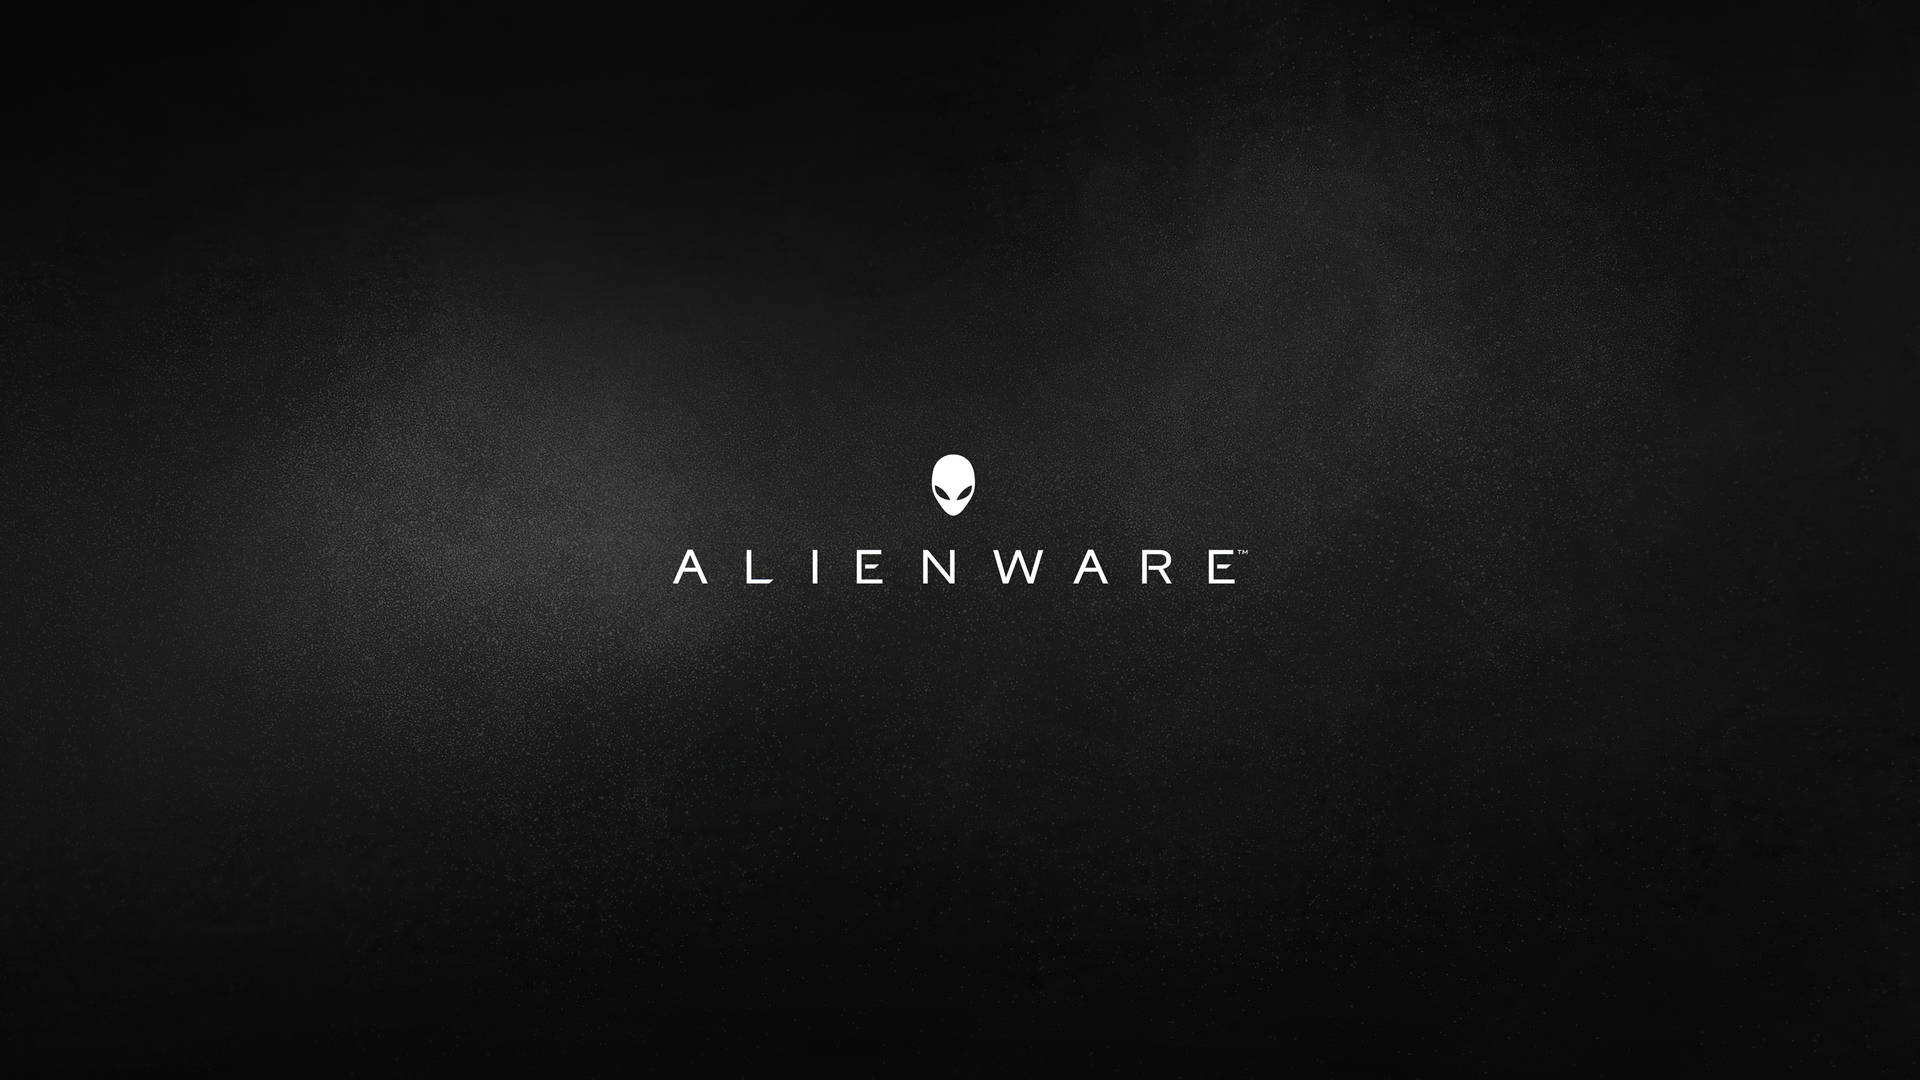 Alienwareblanco En Negro Ahumado. Fondo de pantalla